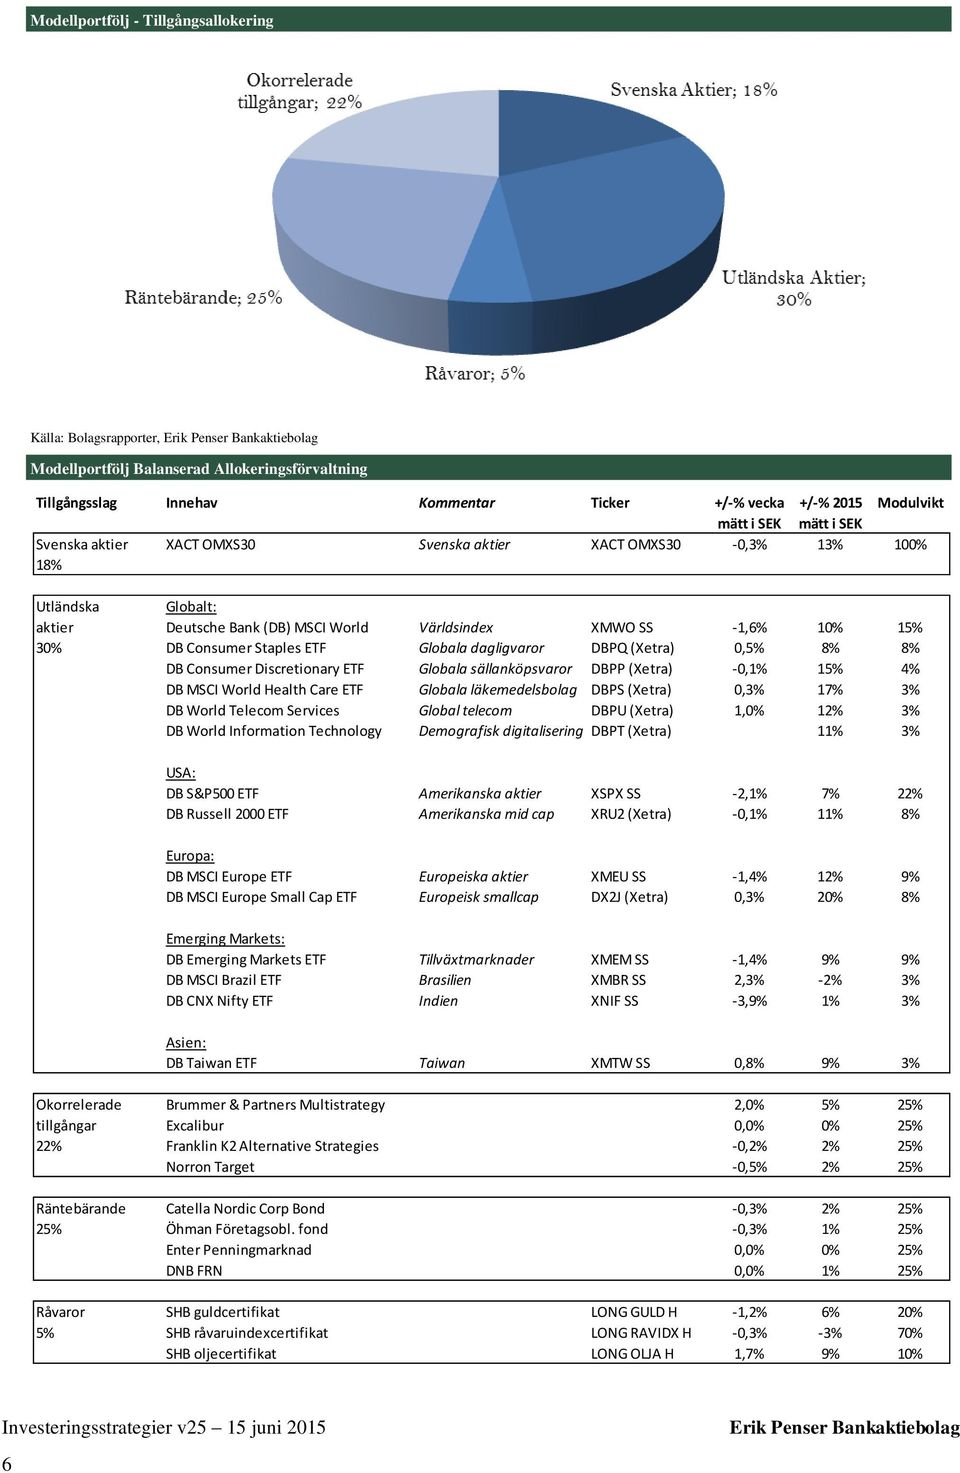 DB Consumer Staples ETF Globala dagligvaror DBPQ (Xetra) 0,5% 8% 8% DB Consumer Discretionary ETF Globala sällanköpsvaror DBPP (Xetra) -0,1% 15% 4% DB MSCI World Health Care ETF Globala